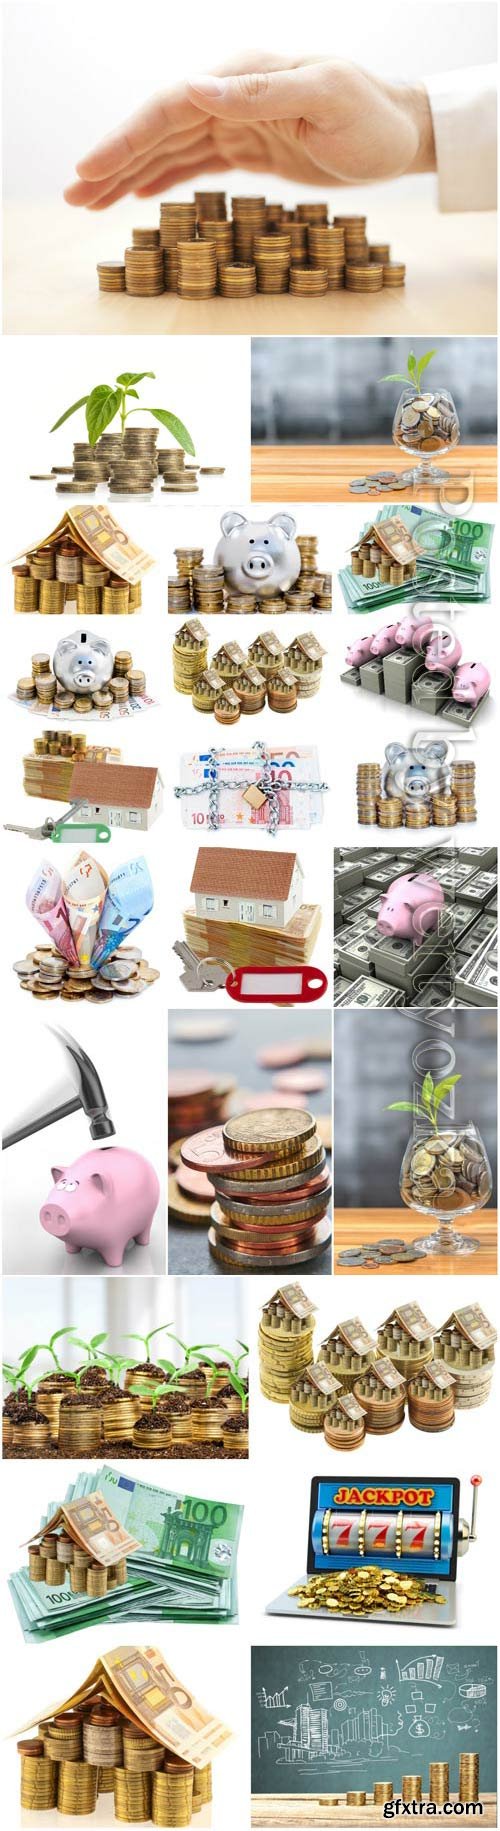 Banknotes, coins stock photo